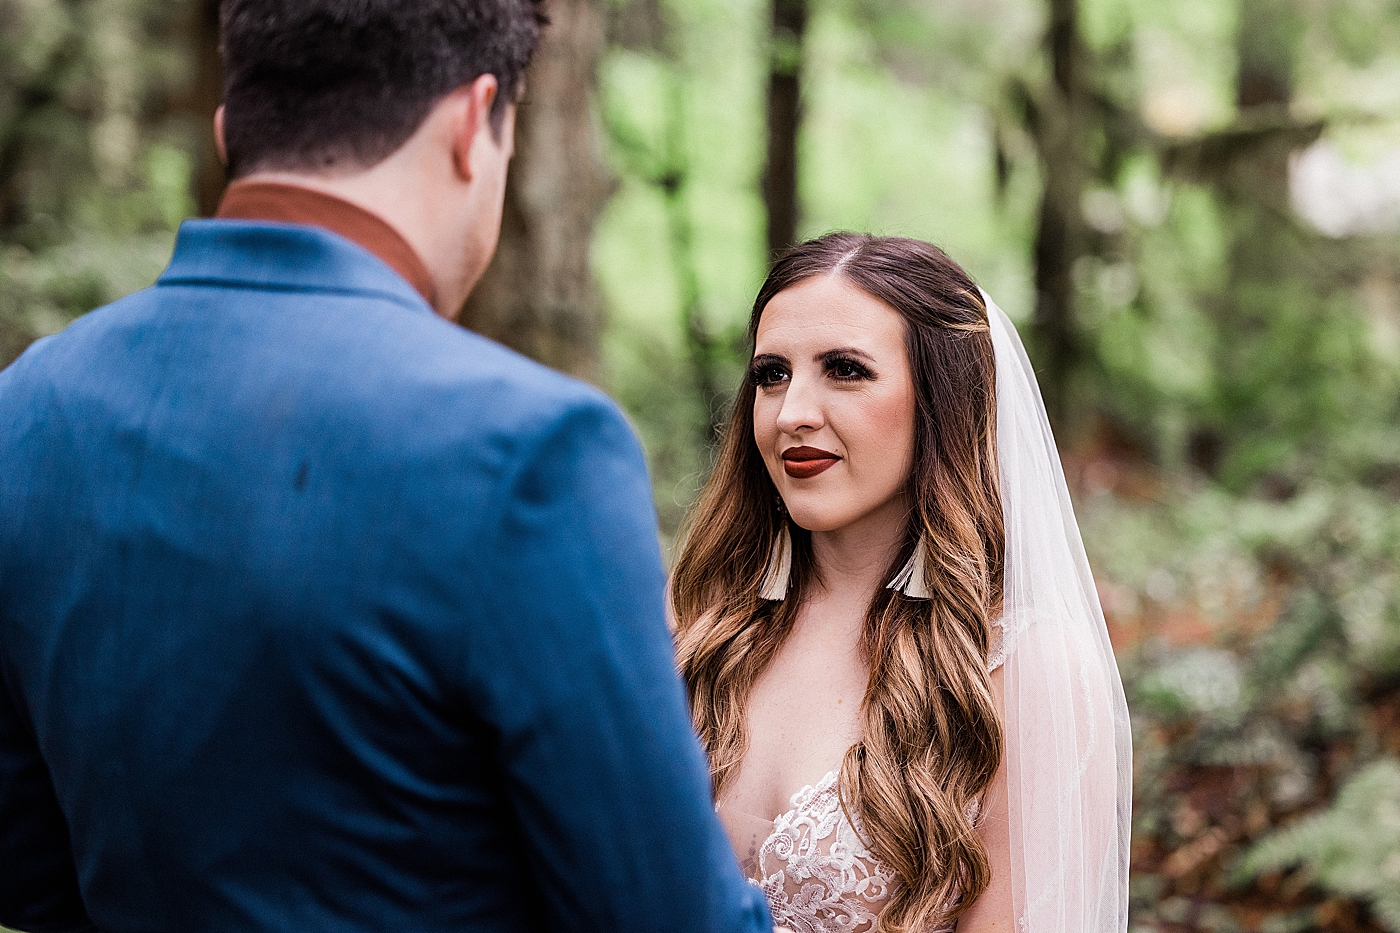 First look between bride and groom before elopement at Mt Rainier | Megan Montalvo Photography